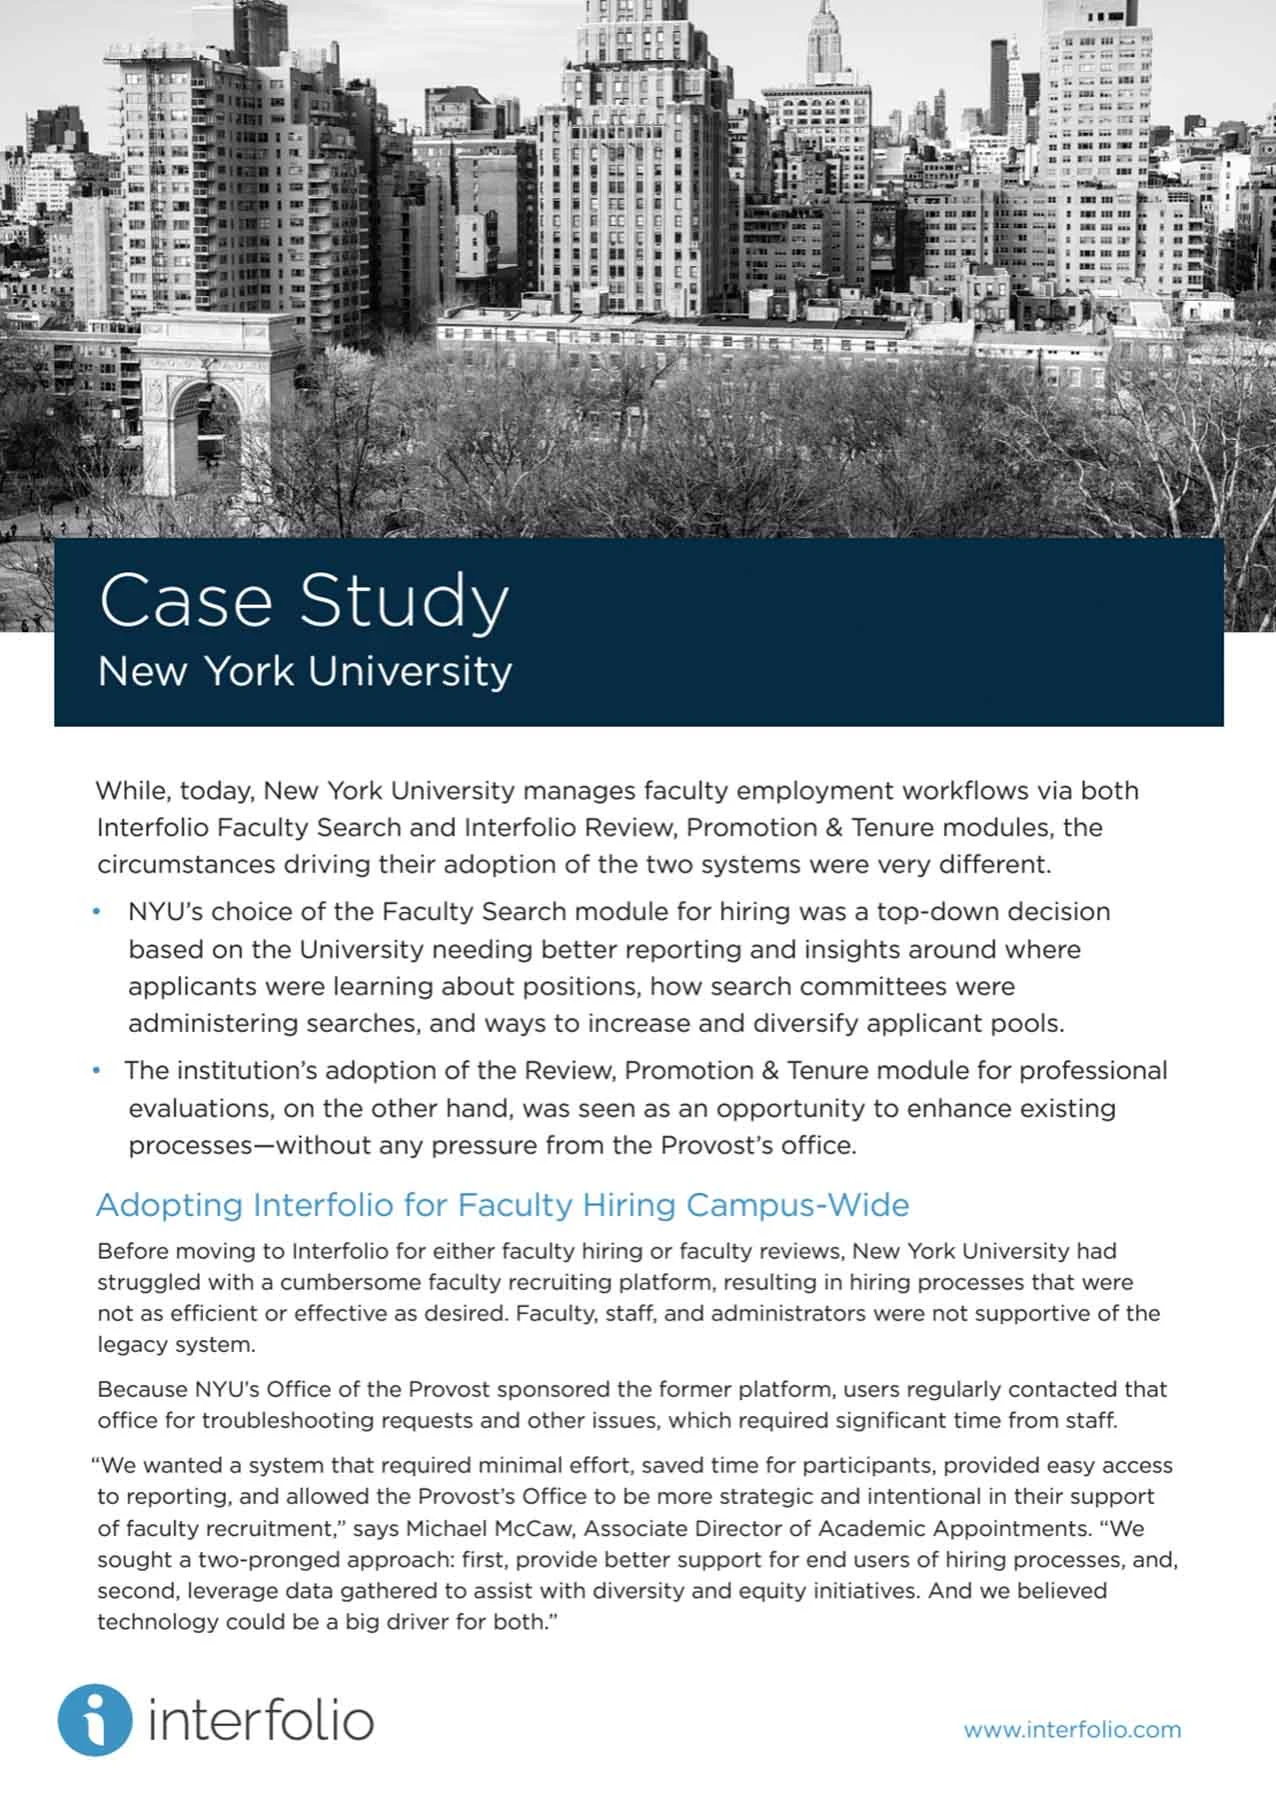 Case Study: New York University cover